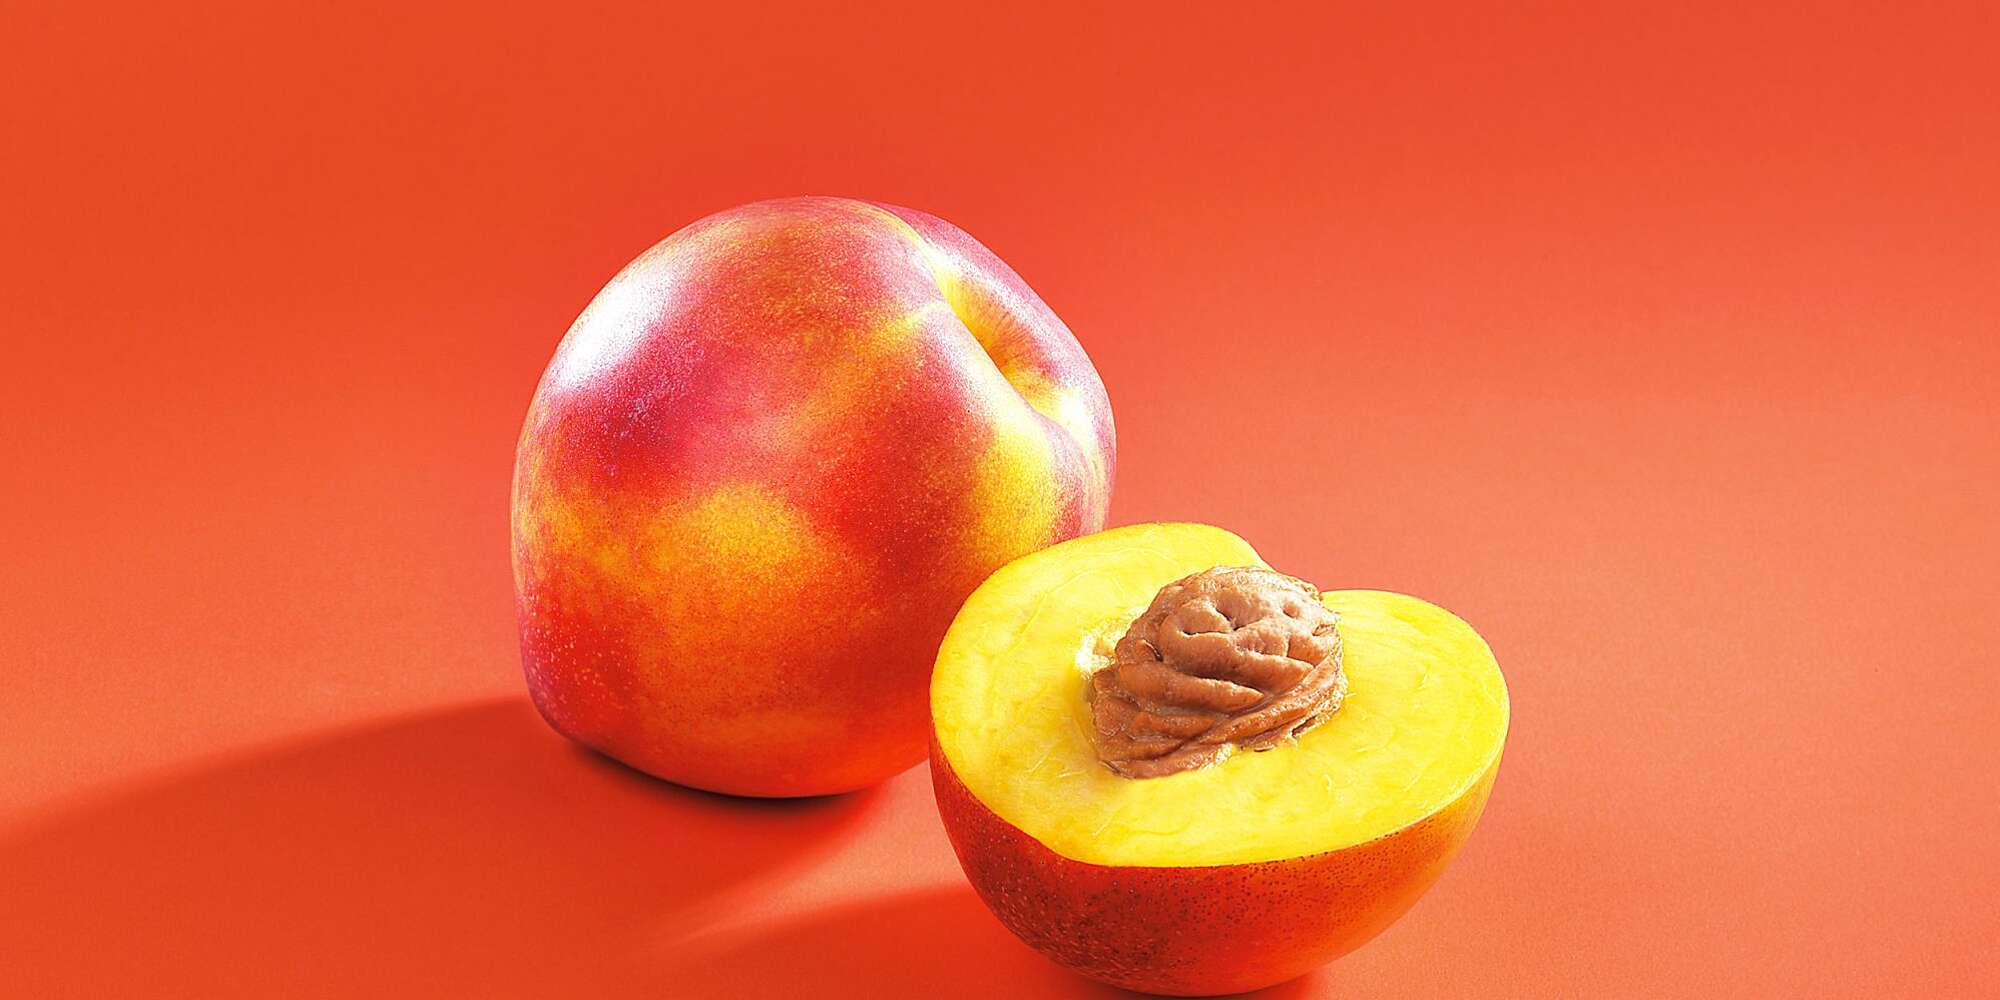 Peach & Nectarine